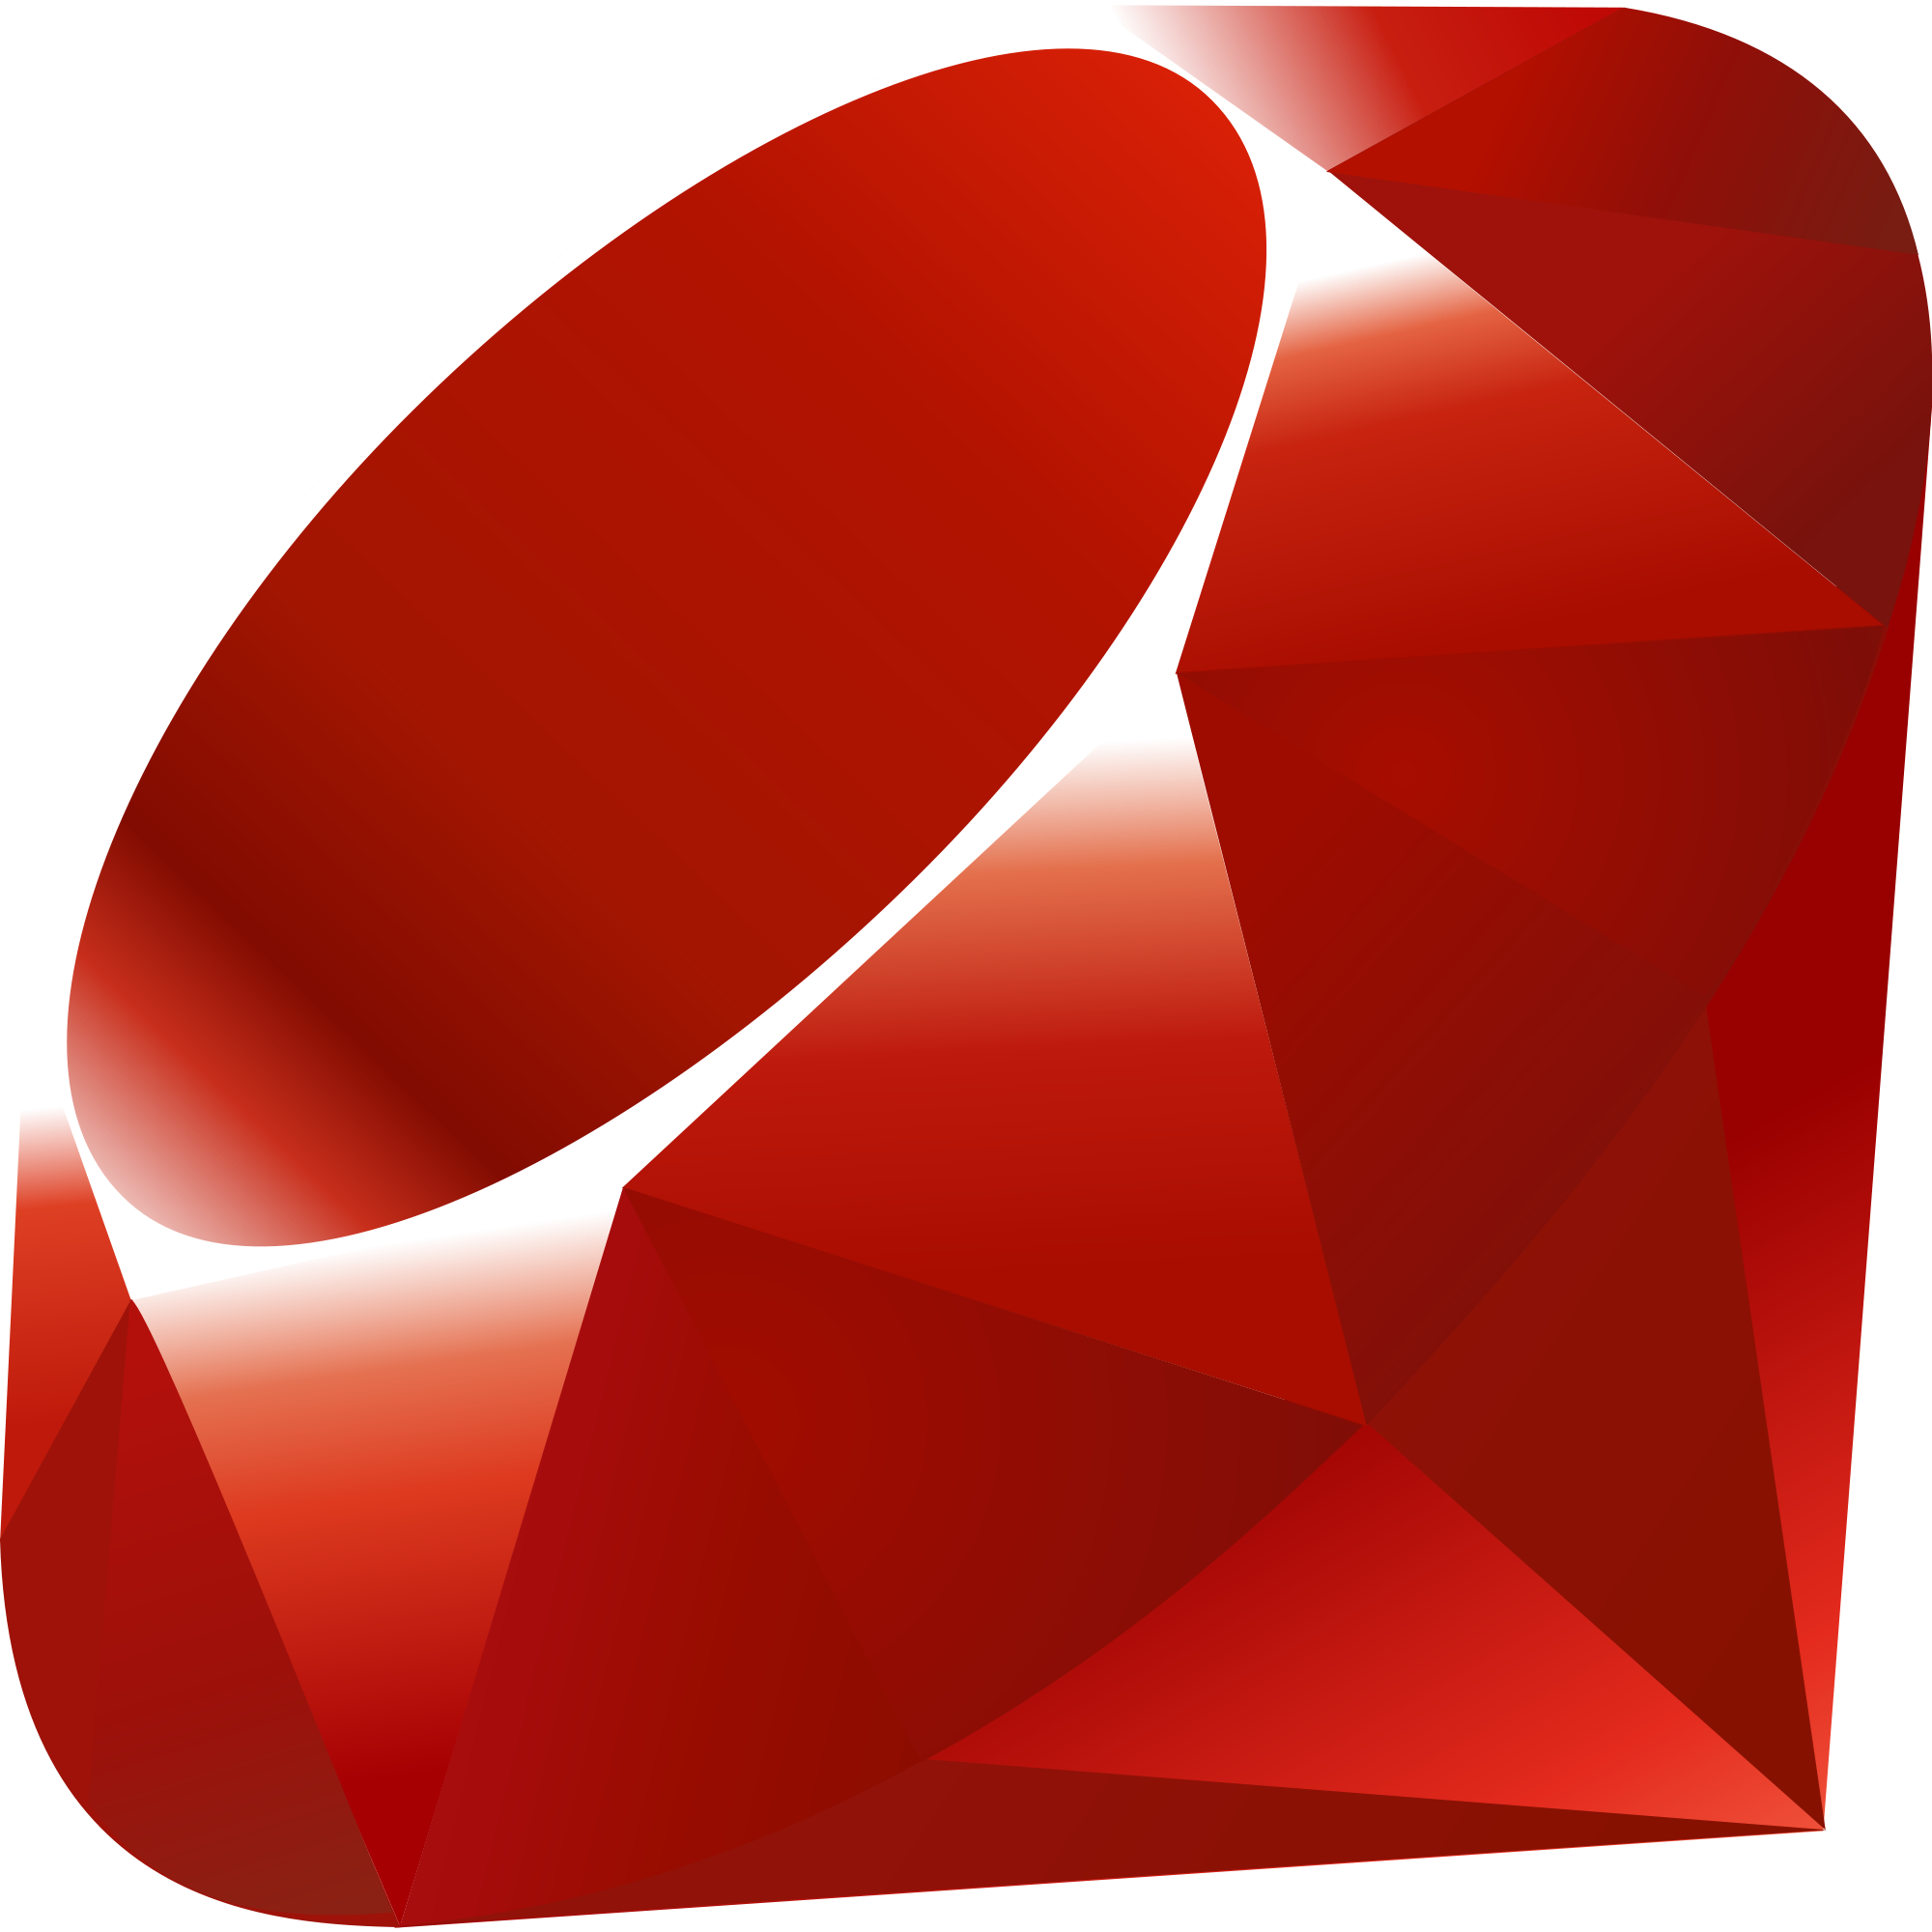 API v4 Client for Ruby